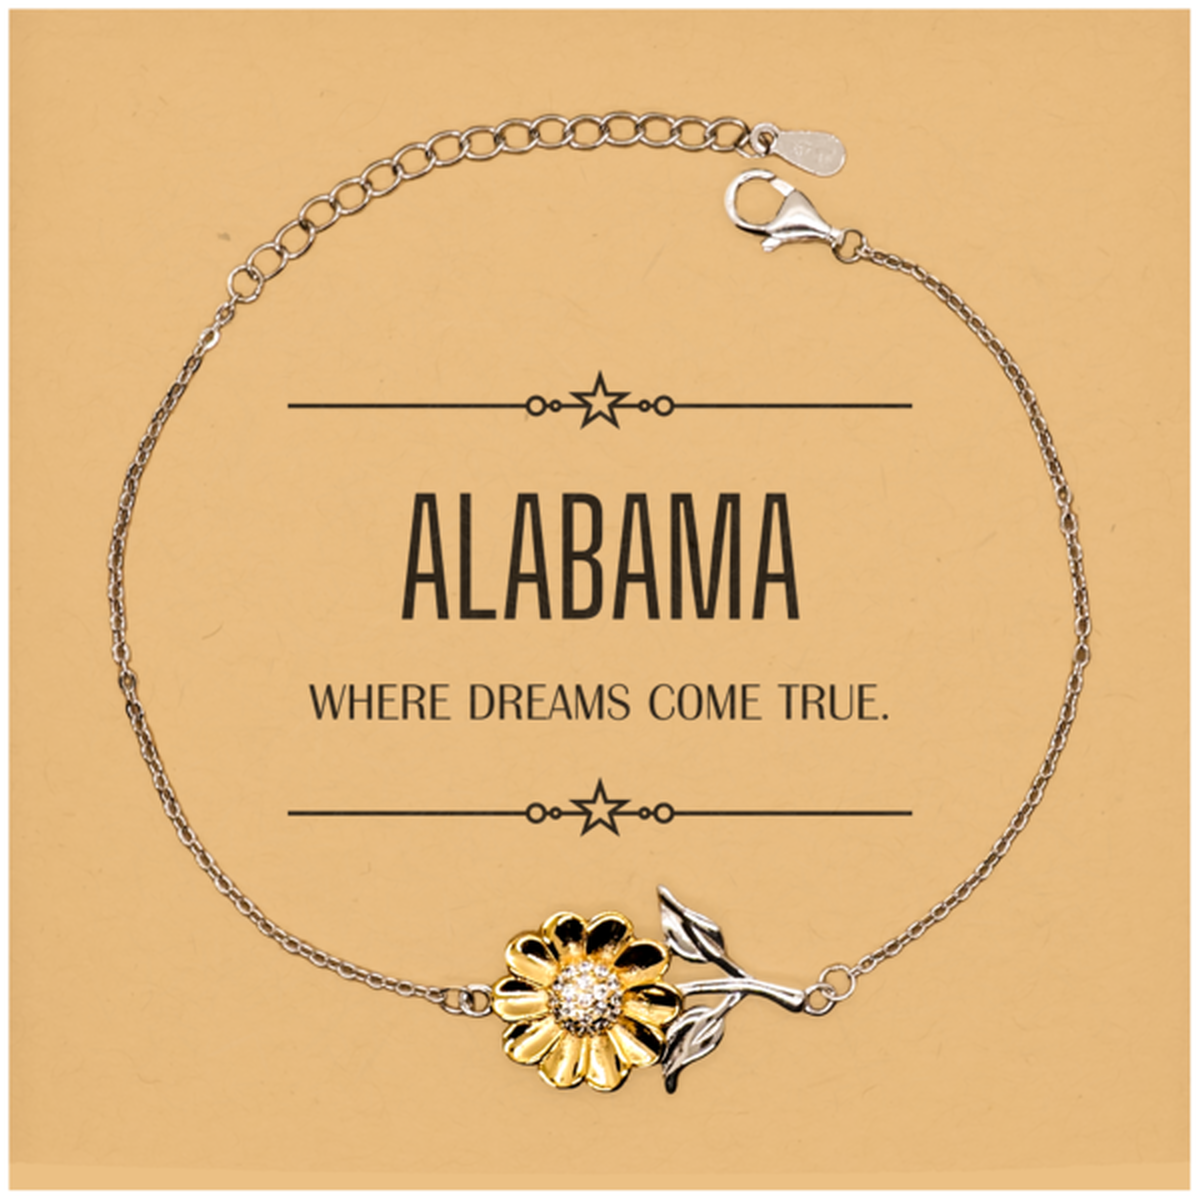 Love Alabama State Sunflower Bracelet, Alabama Where dreams come true, Birthday Christmas Inspirational Gifts For Alabama Men, Women, Friends